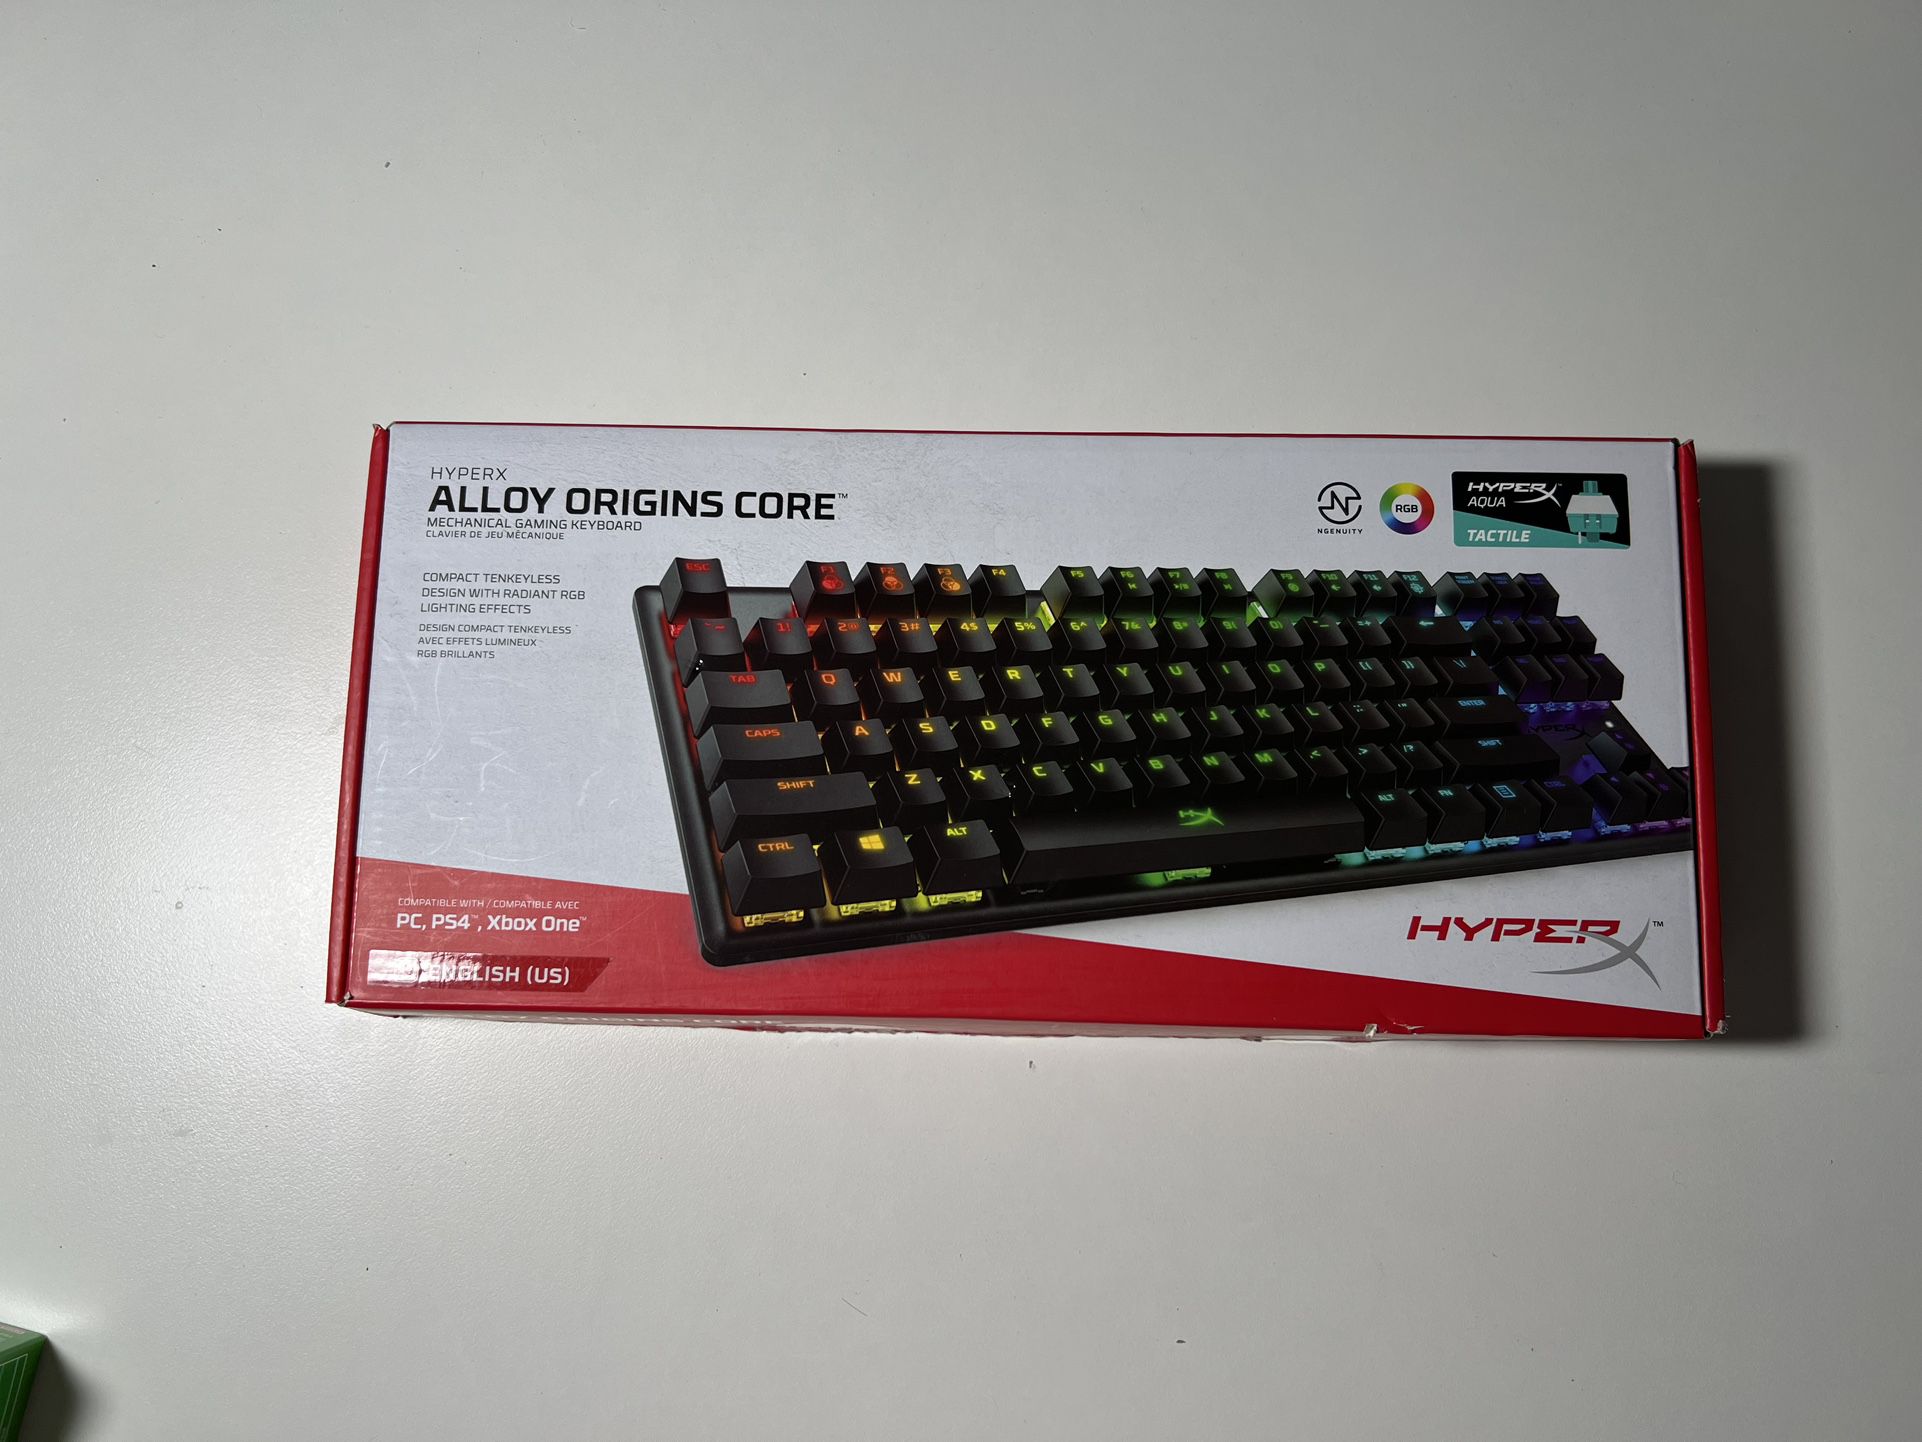 HyperX Alloy Gaming Keyboard